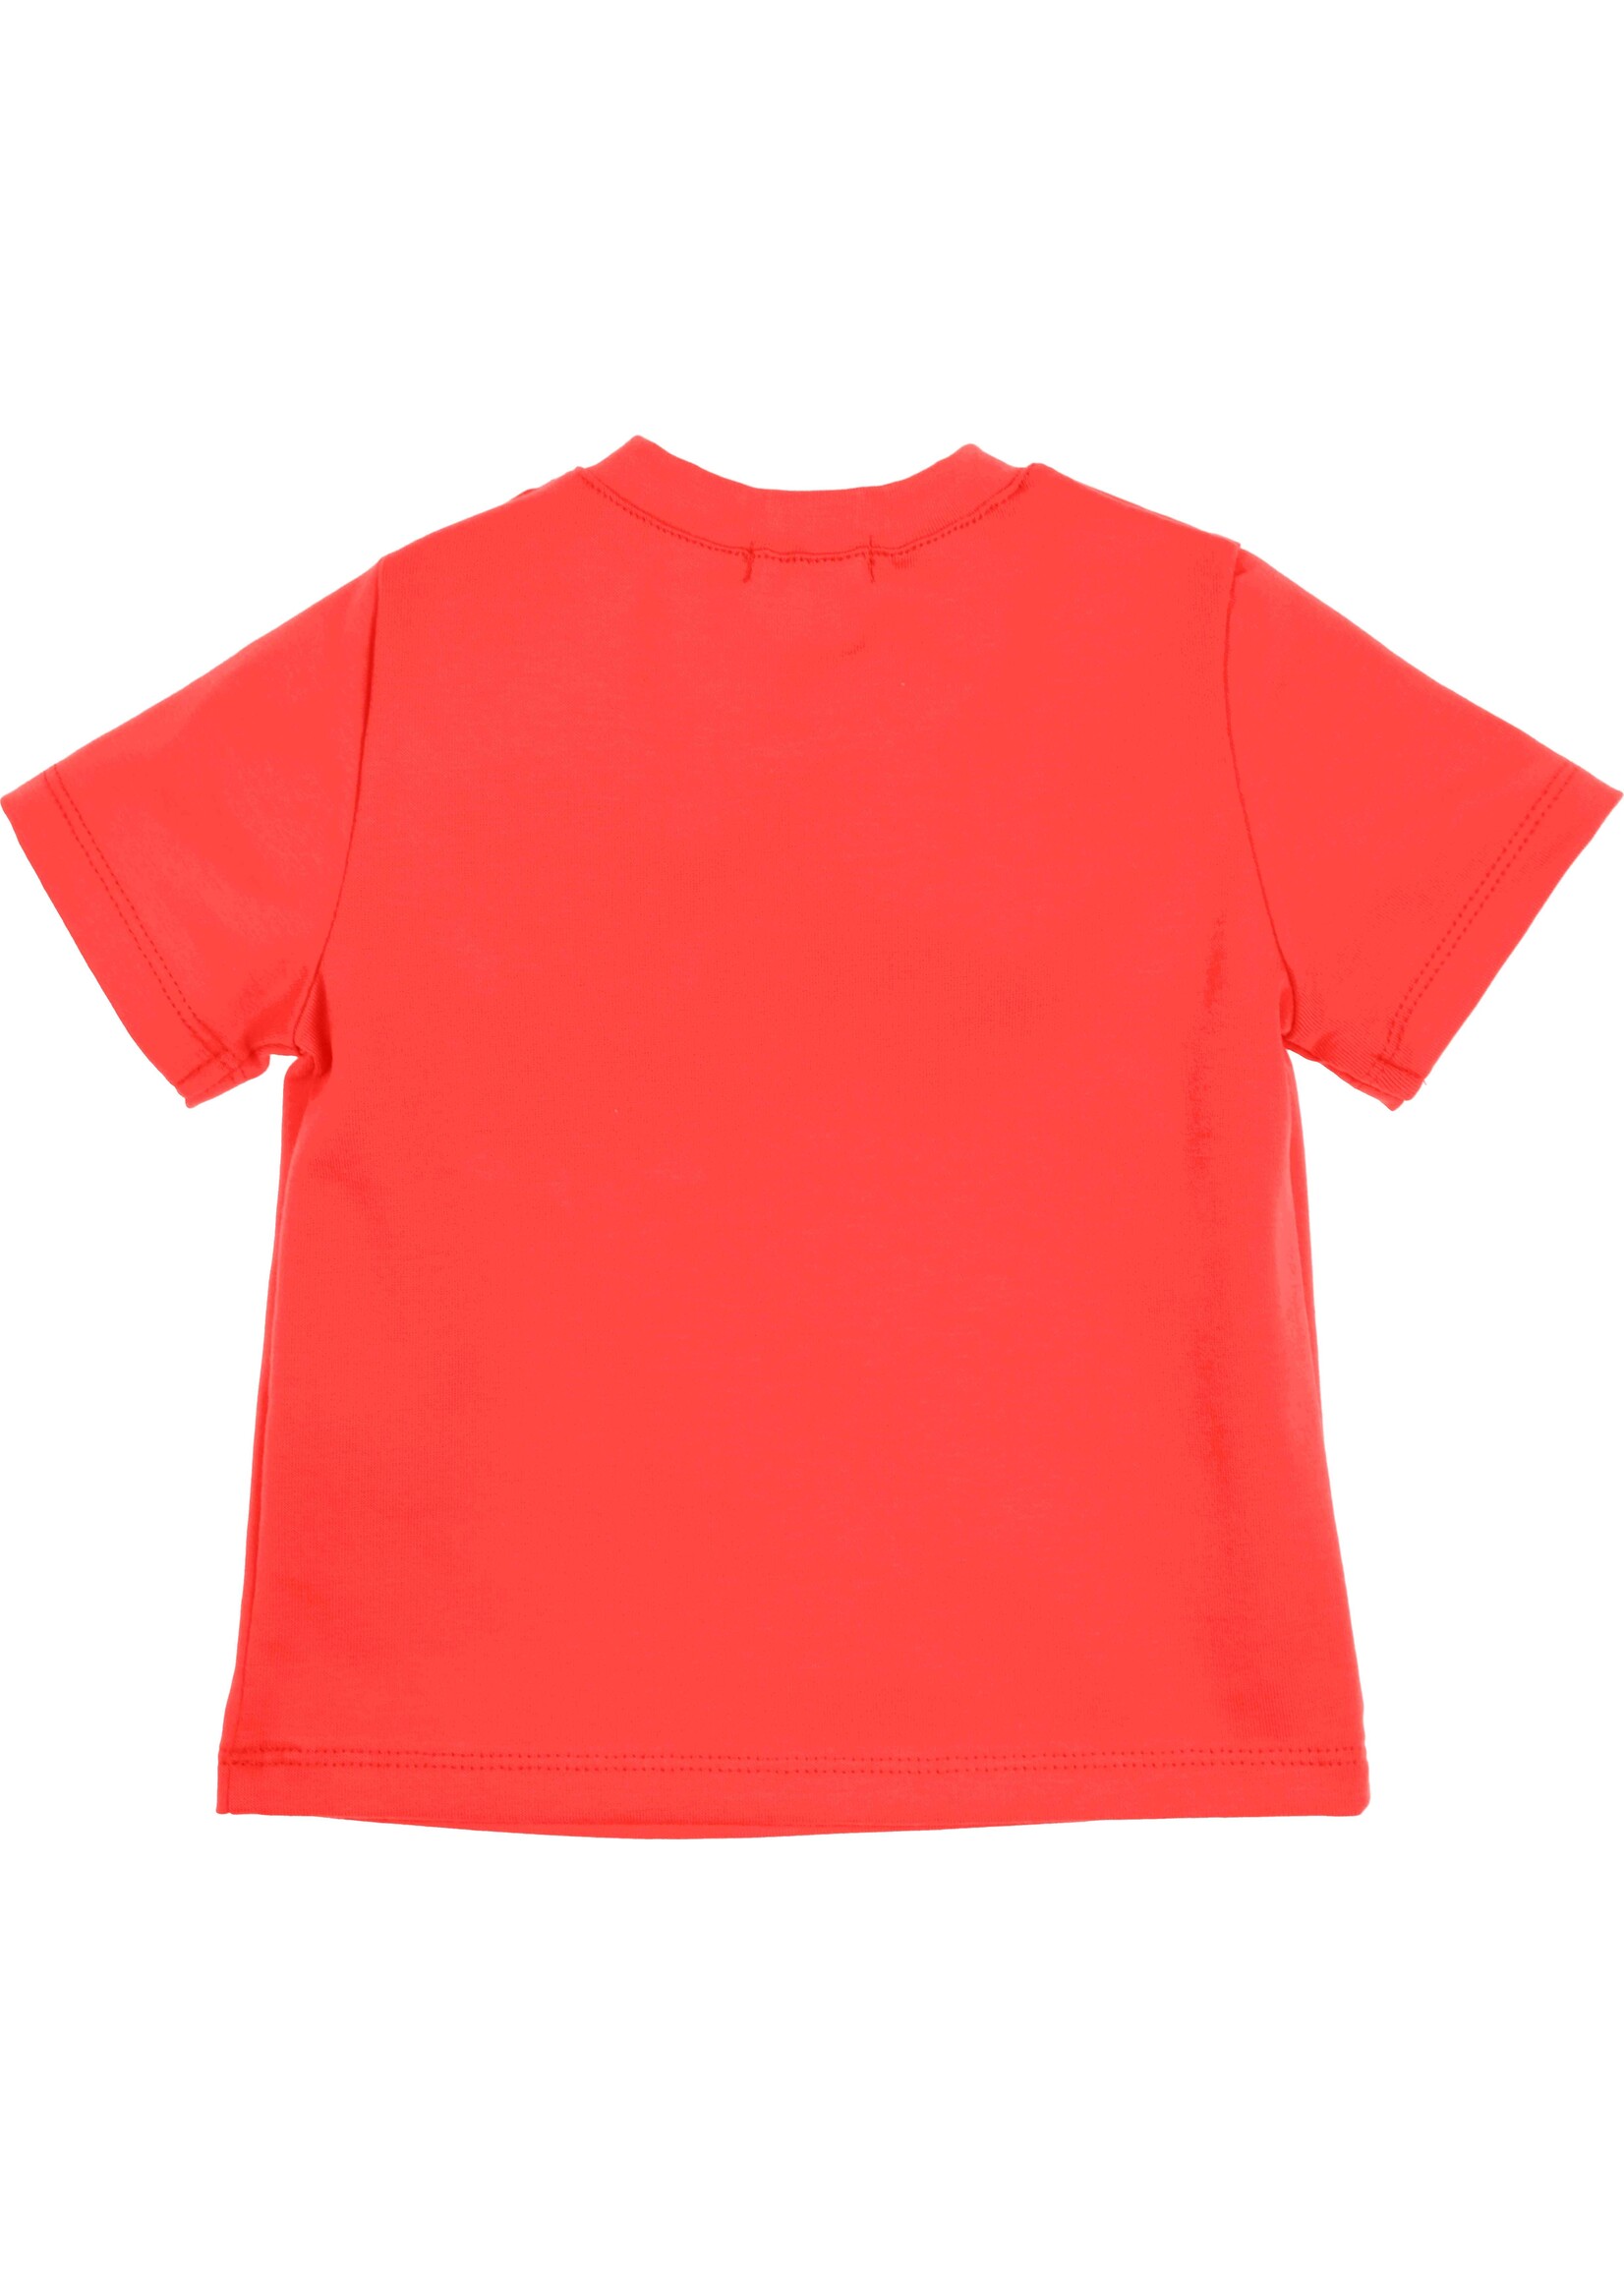 Gymp Boys T-shirt Aerobic 353-4158-20 Red